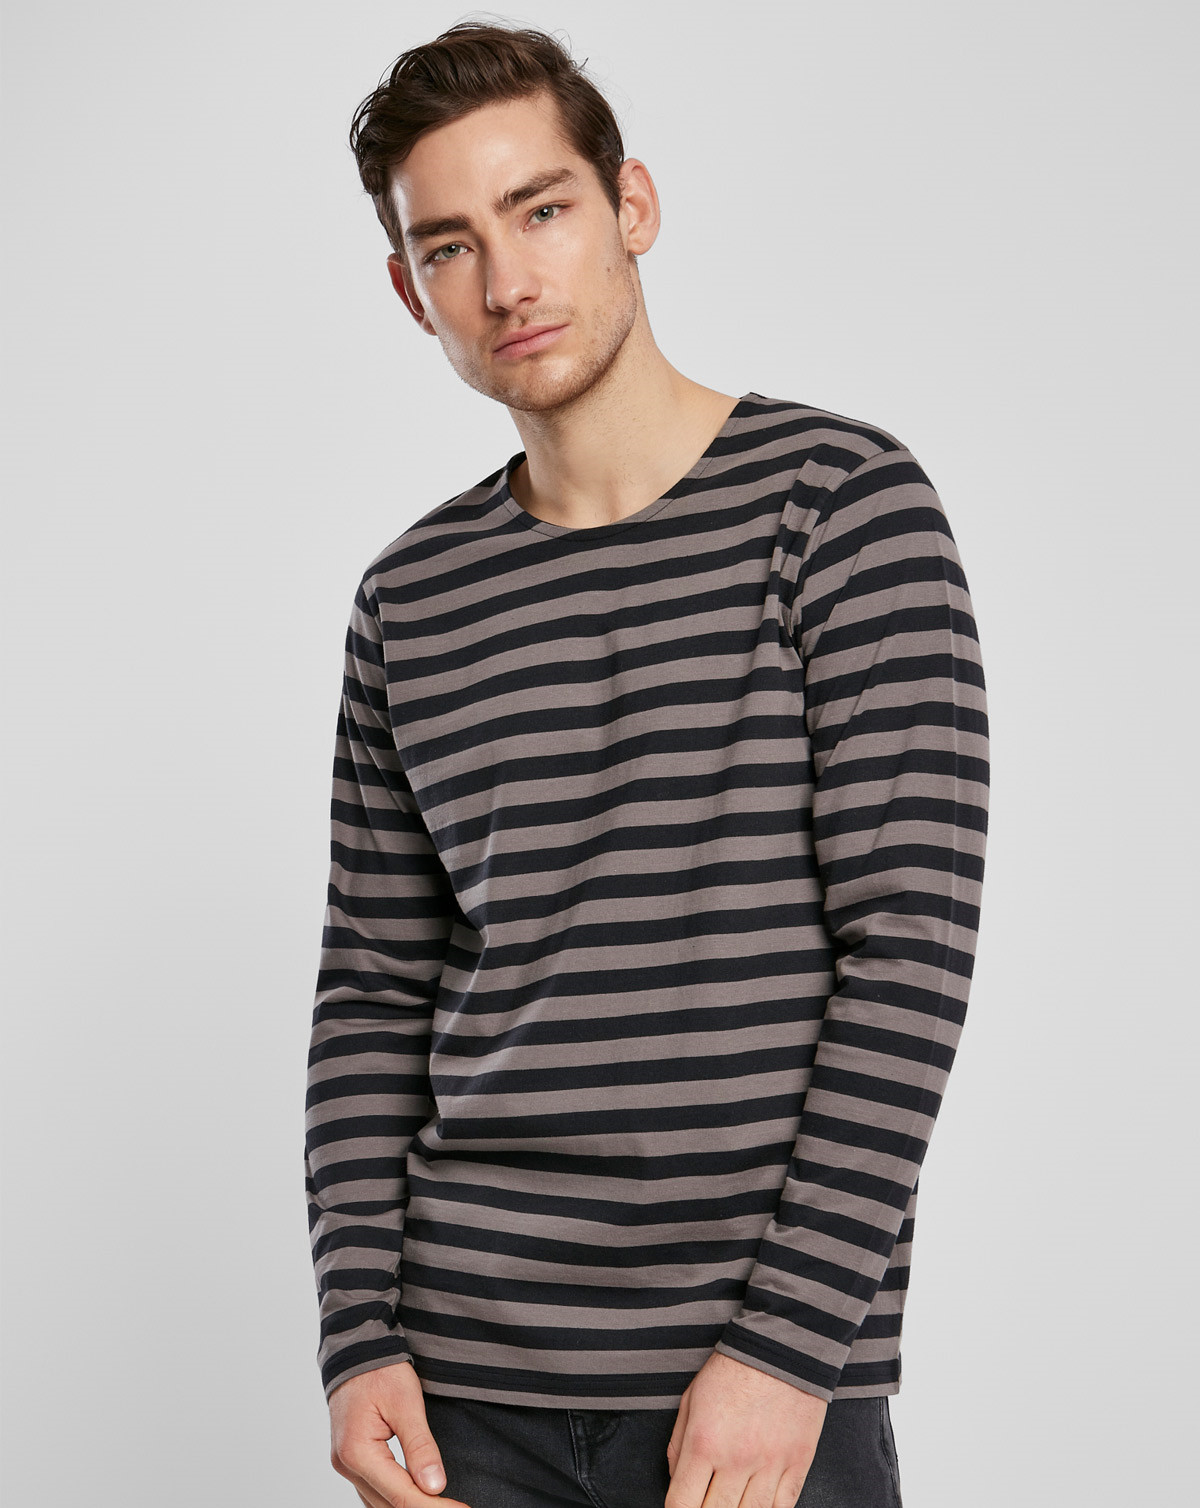 7: Urban Classics Regular StripeLong Sleeve T-Shirt (Asphalt / Black, 5XL)